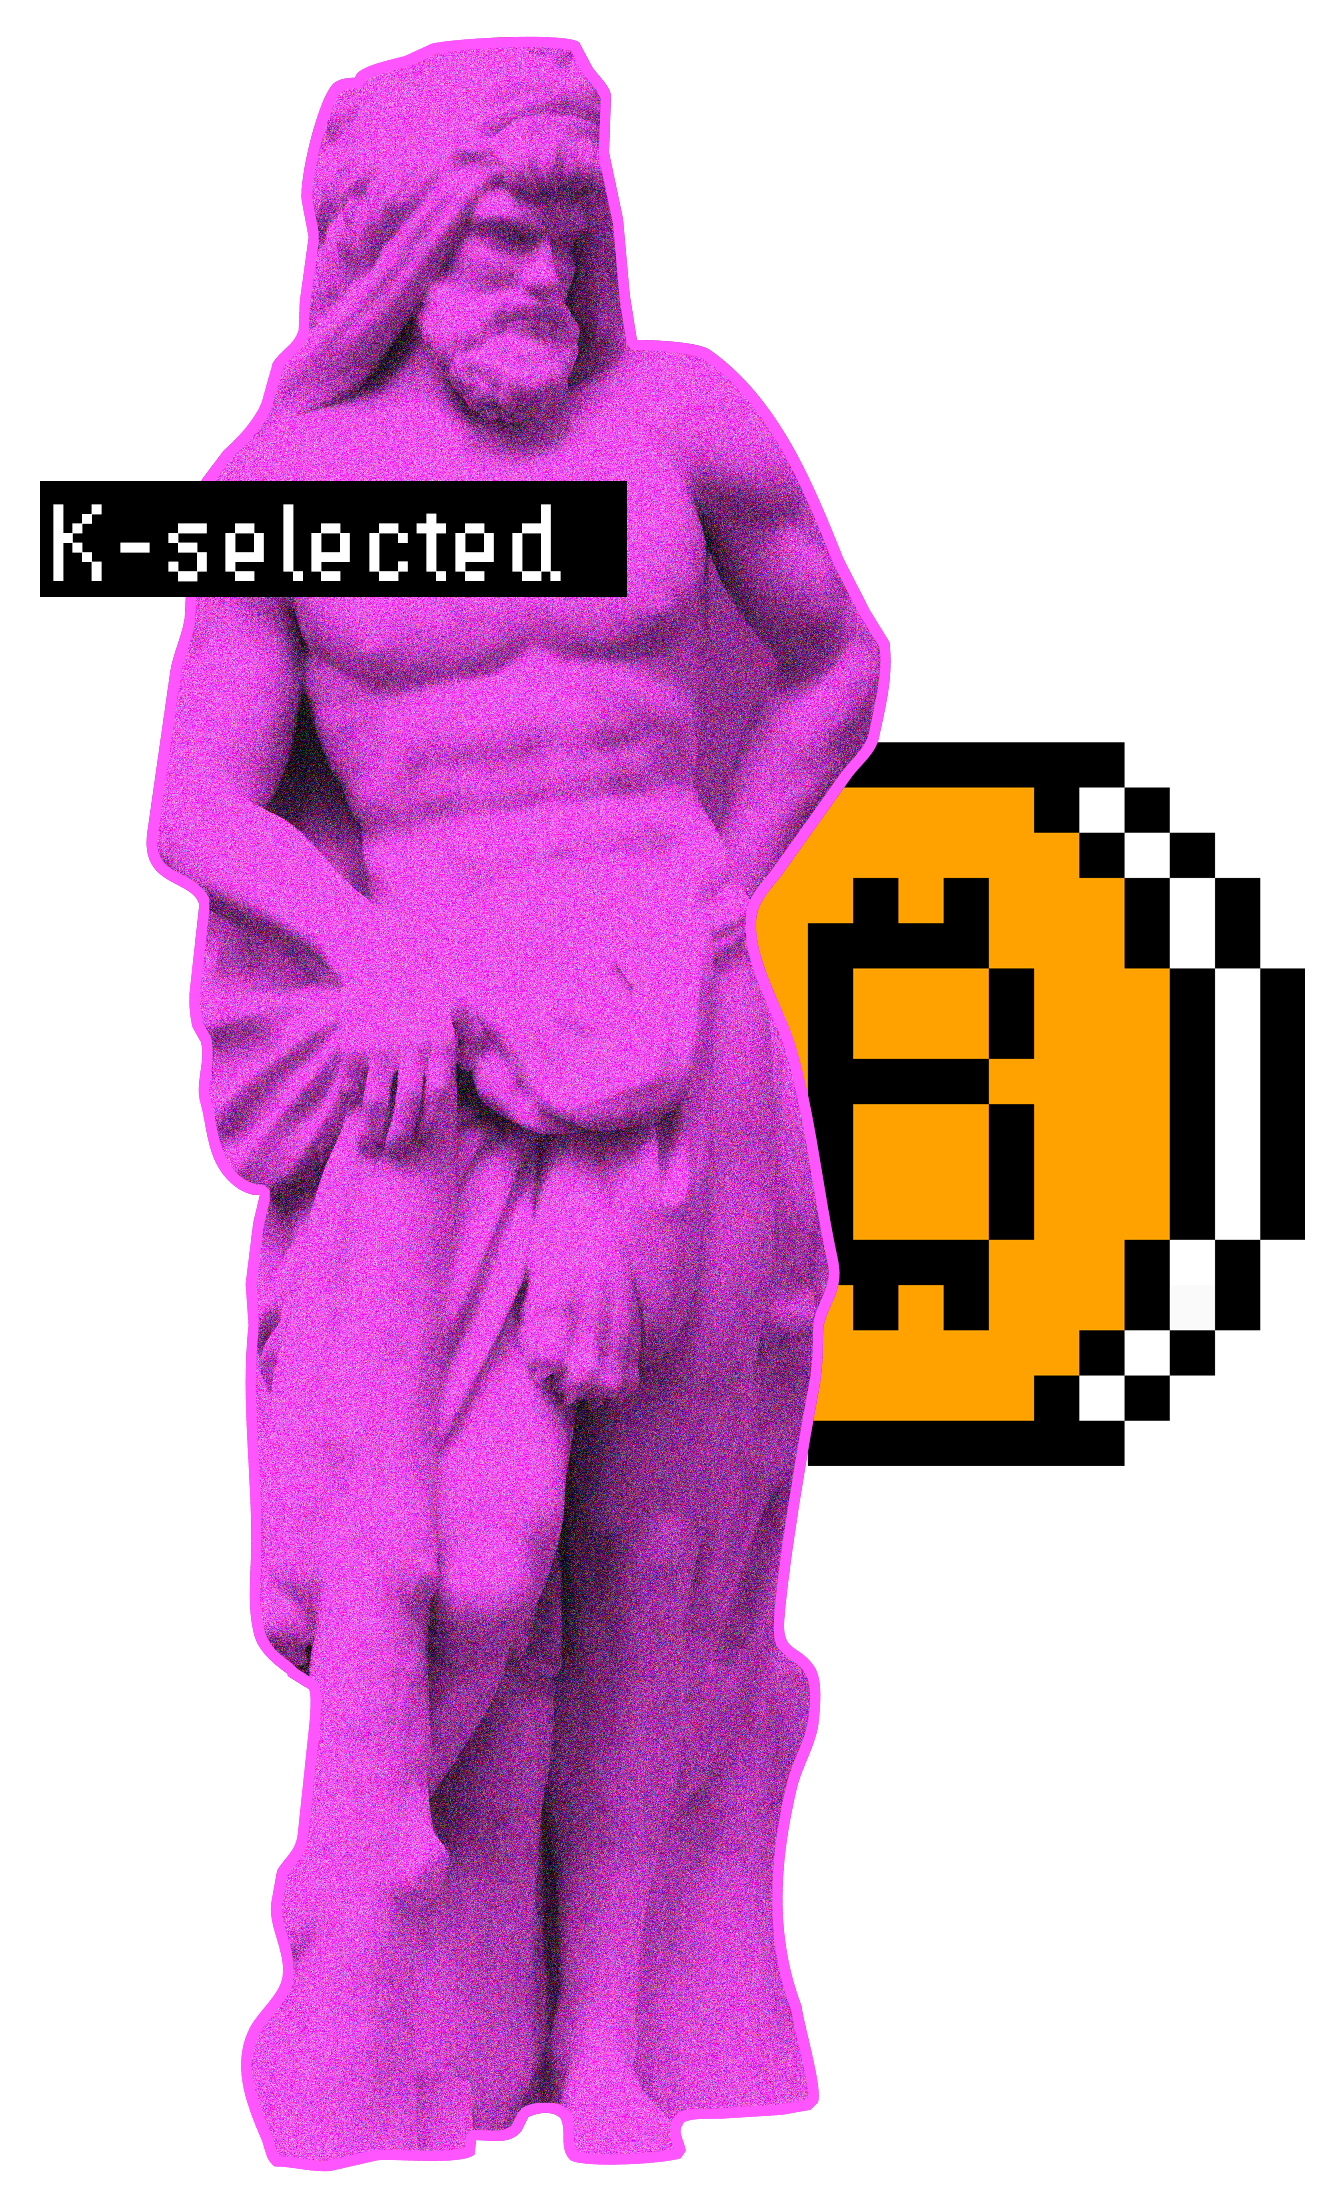 k-selected-h-BTC.png